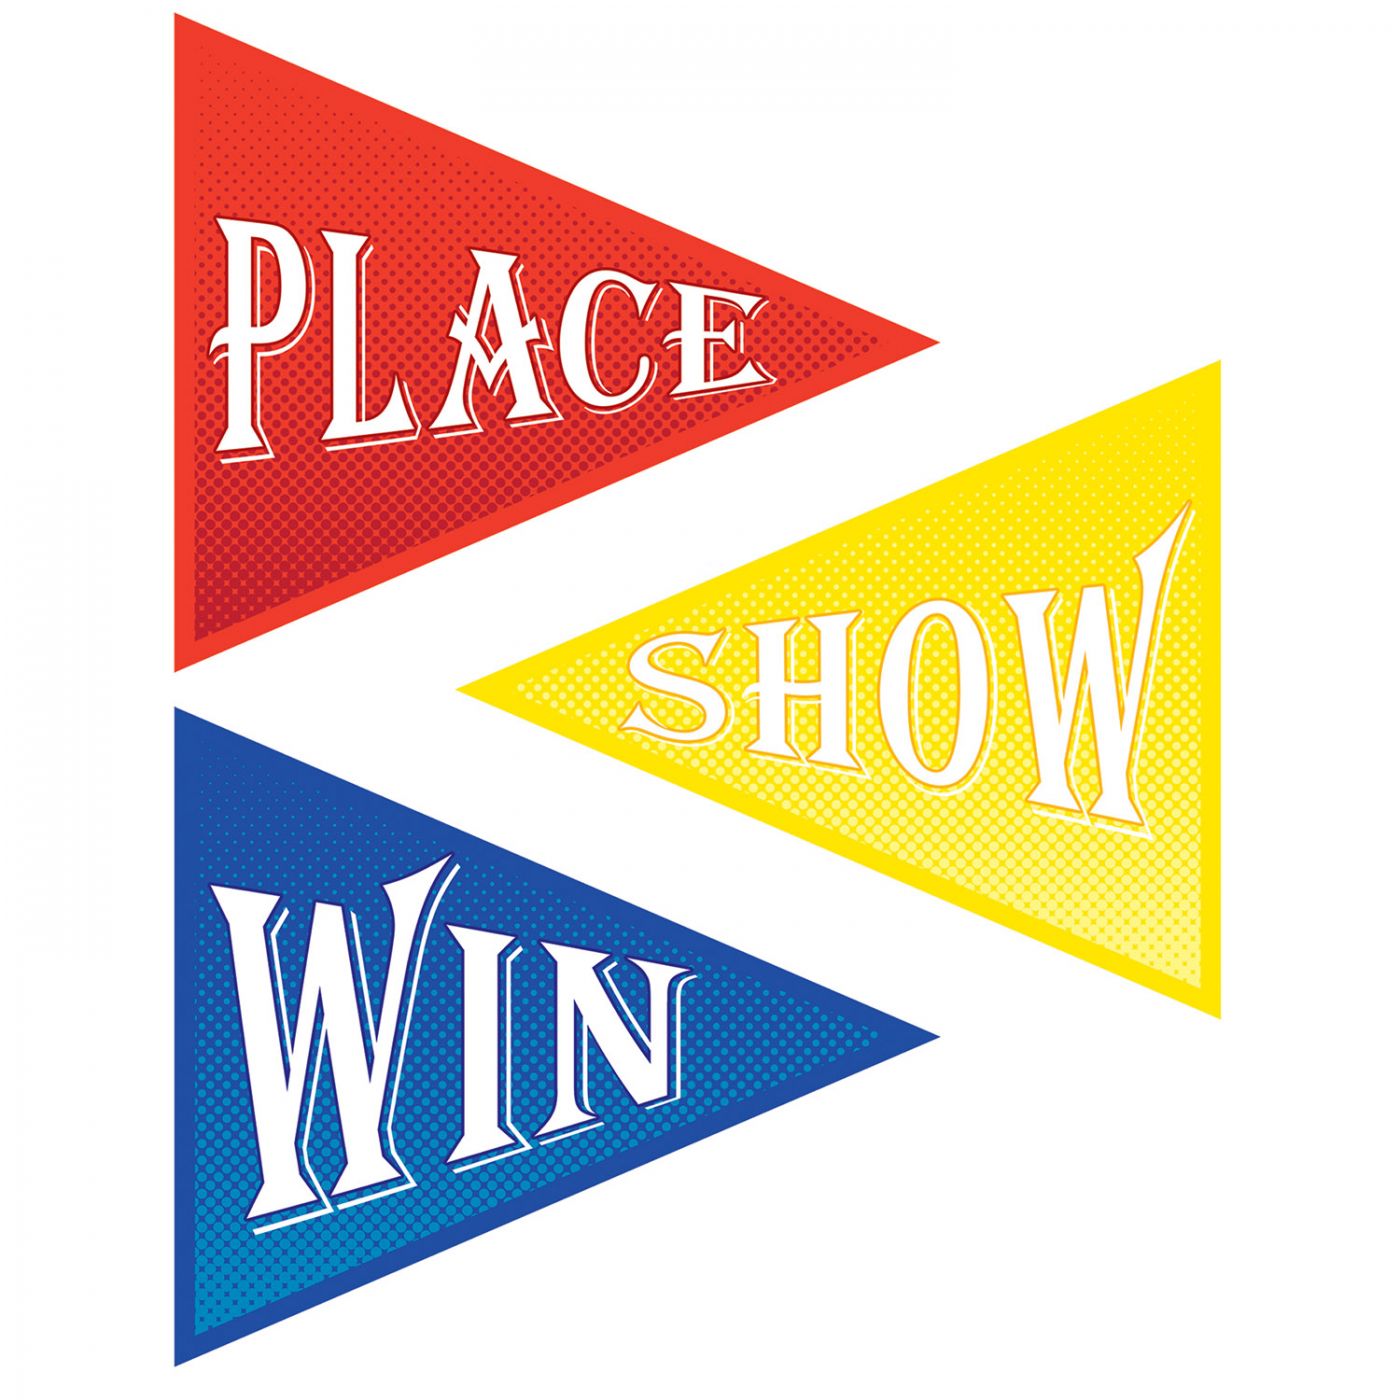 Place, Win & Show Cutouts (12) image